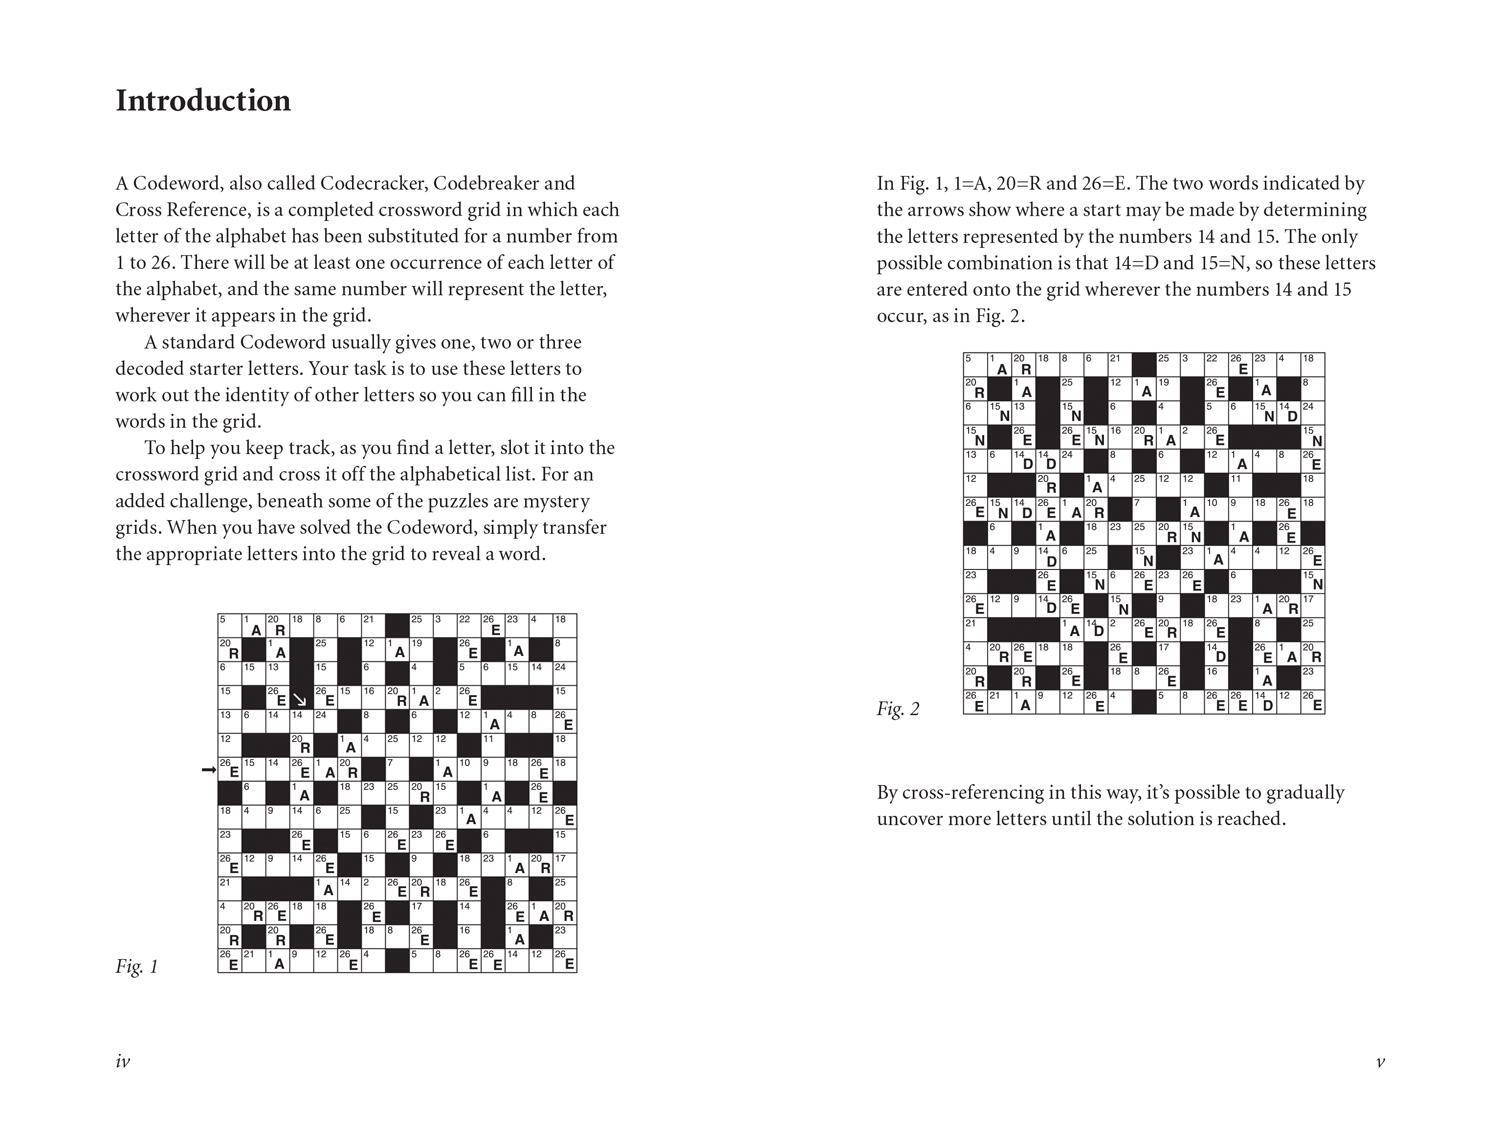 Bild: 9780008218607 | The Times Codeword 8: 200 Cracking Logic Puzzles | Games | Taschenbuch